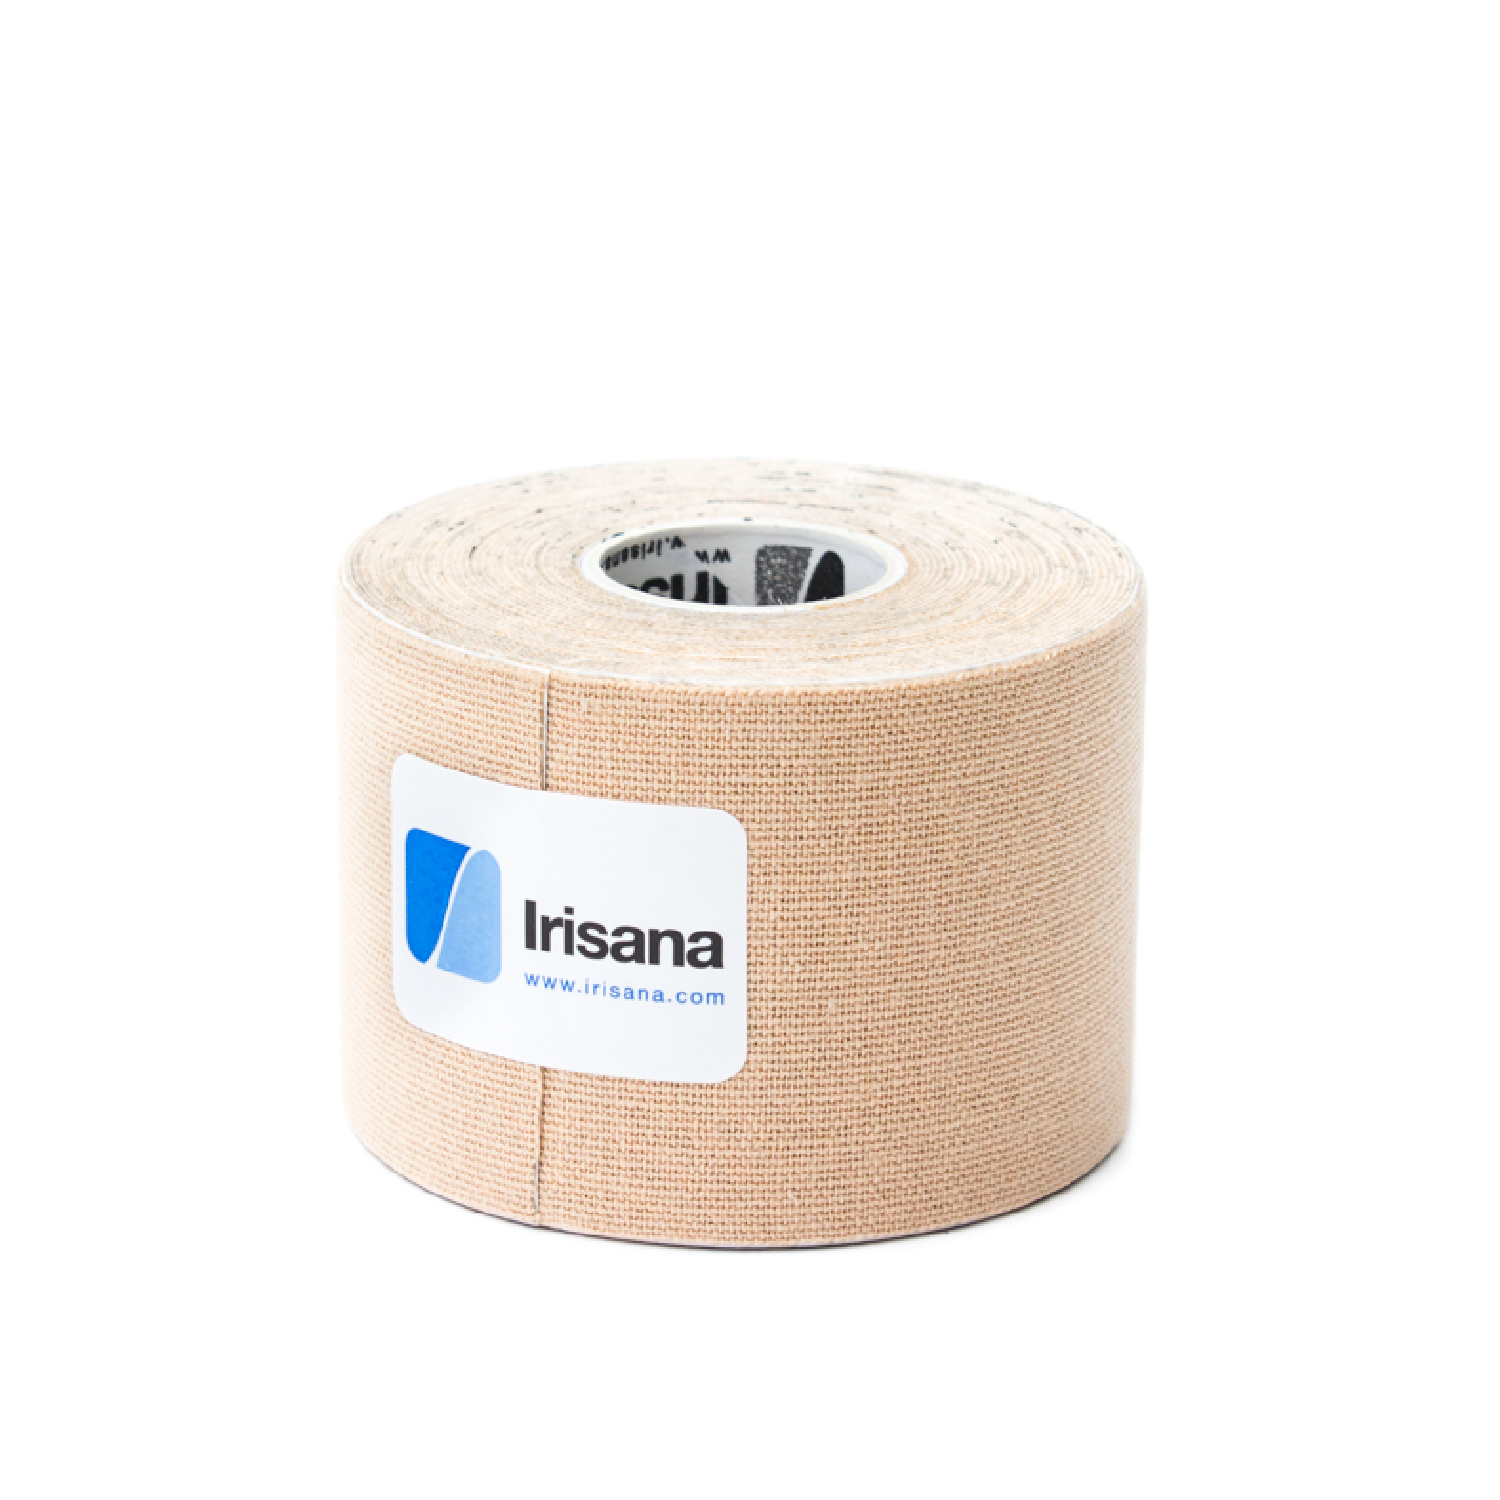 Irisana - Esparadrapo Deportivo - Beige - 6,5 x 5 x 6,5 cm - Kinesiology  Tape - Vendaje Elástico Neuromuscular - Turmalina - Elástico, Resiste al  Agua